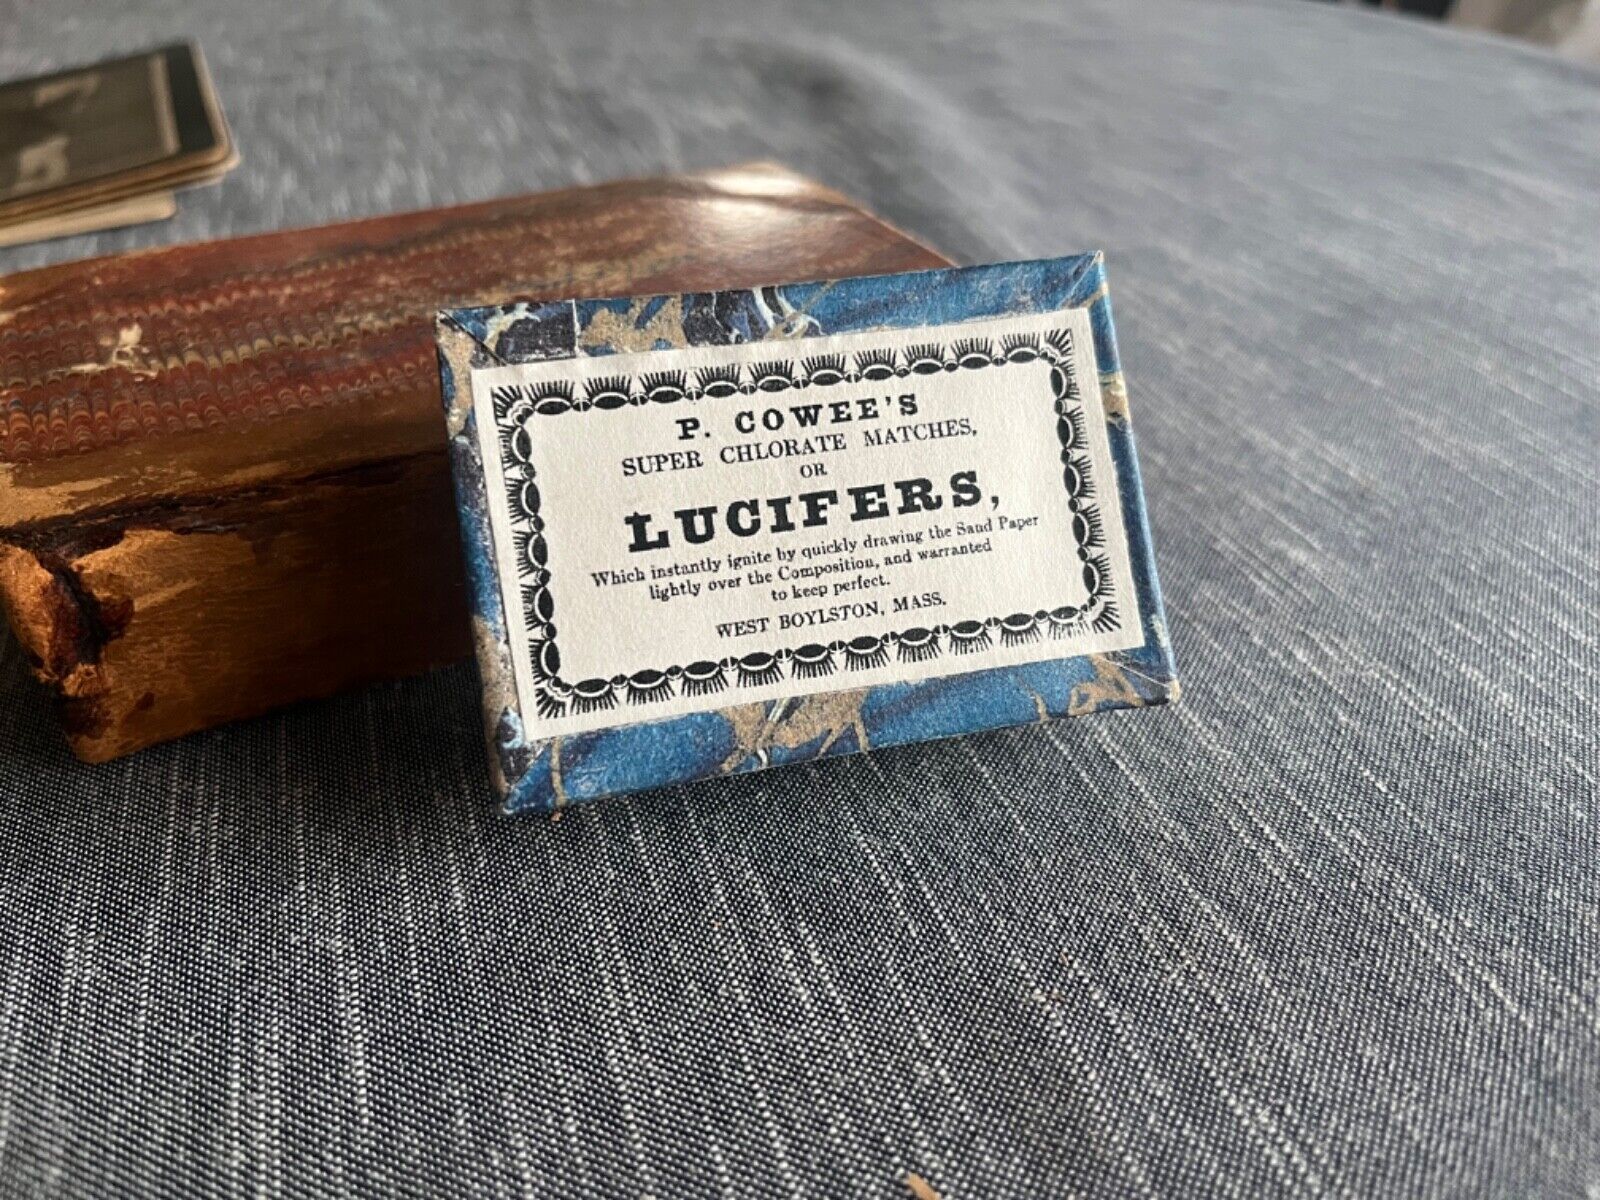 19th Century Lucifers Match Box. Great Civil War Reenactment Reproduction